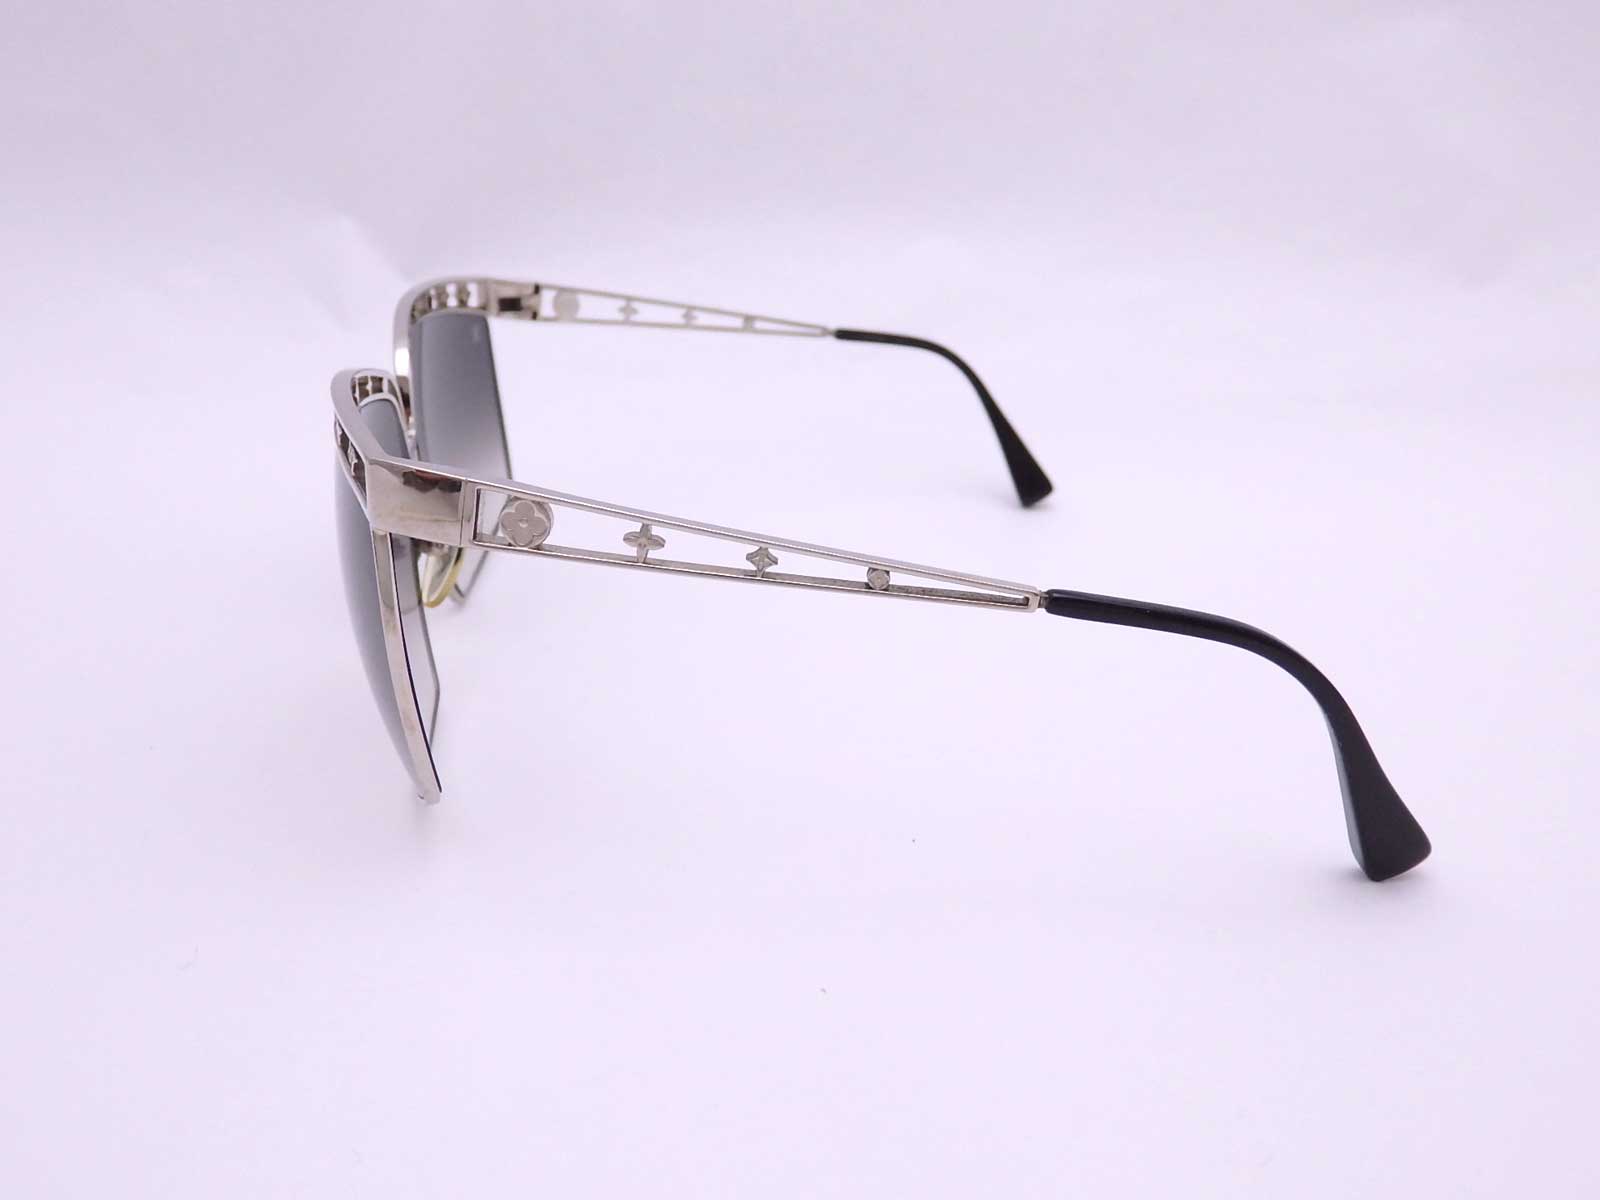 Auth LOUIS VUITTON Monogram Logo Fashion Sunglasses Gradation Black - e31733 | eBay